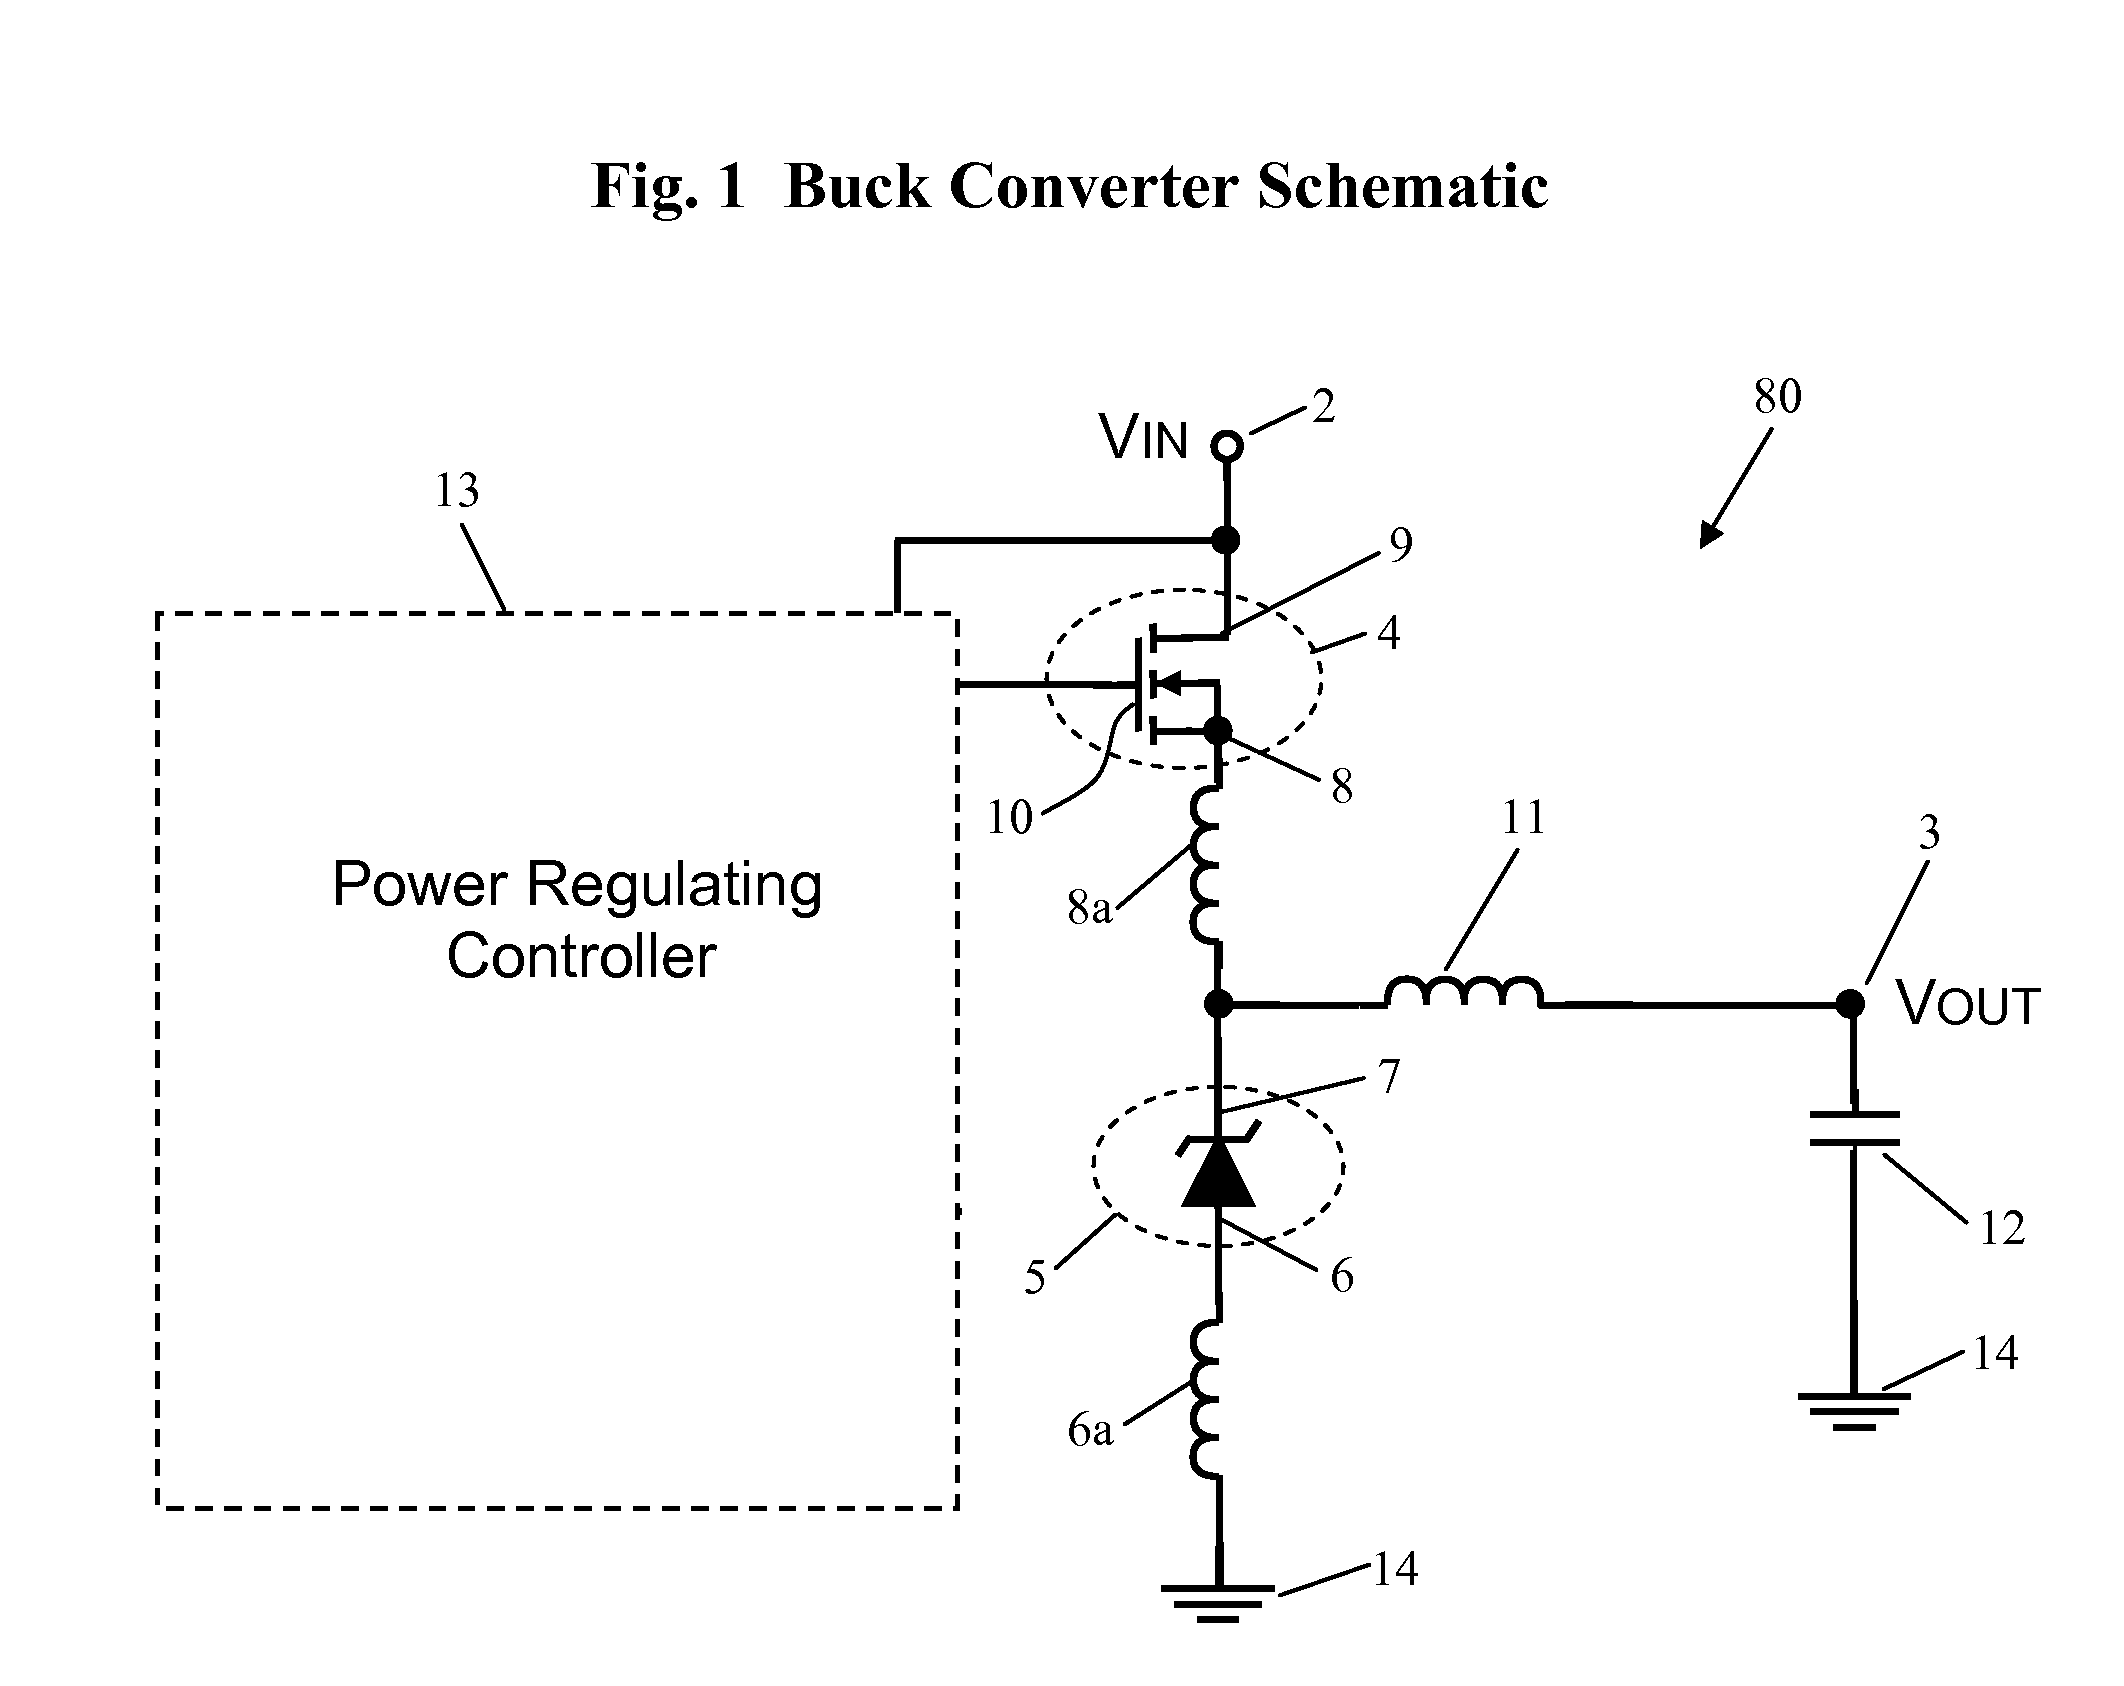 Multi-die DC-DC Buck Power Converter with Efficient Packaging